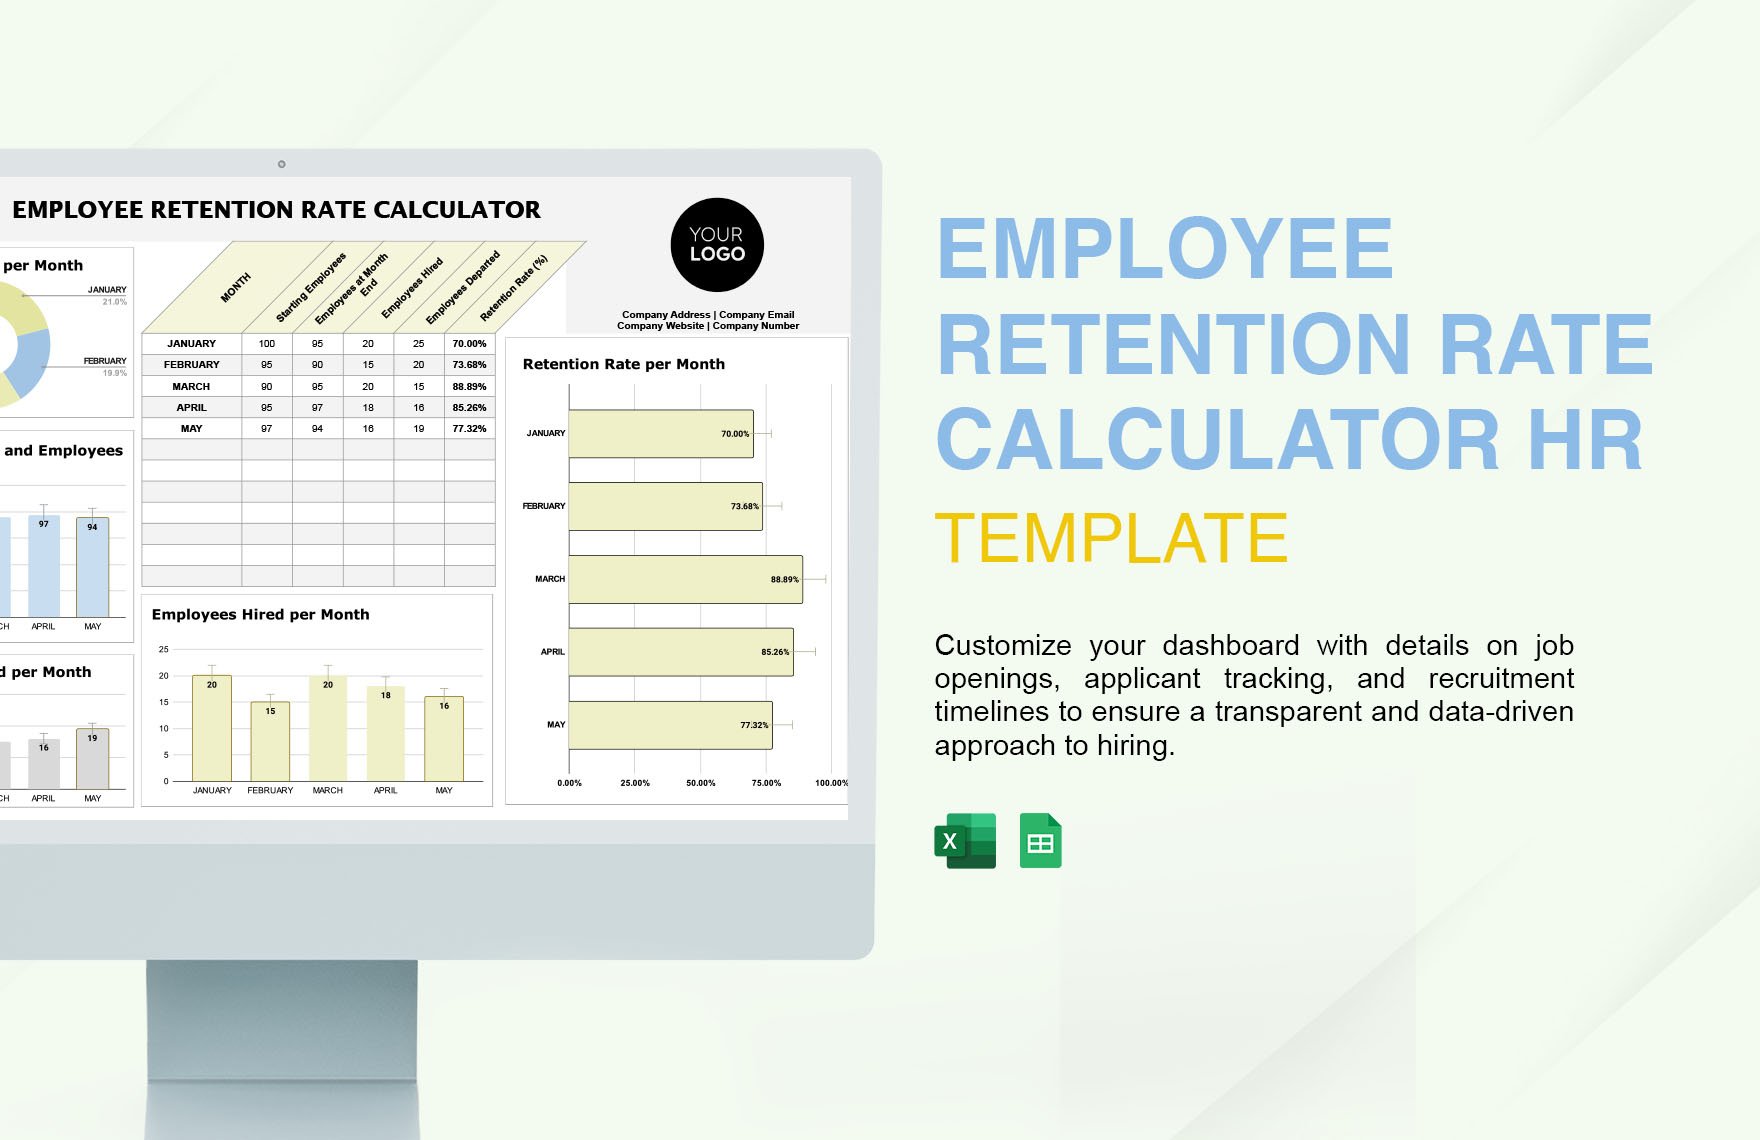 Employee Retention Rate Calculator HR Template